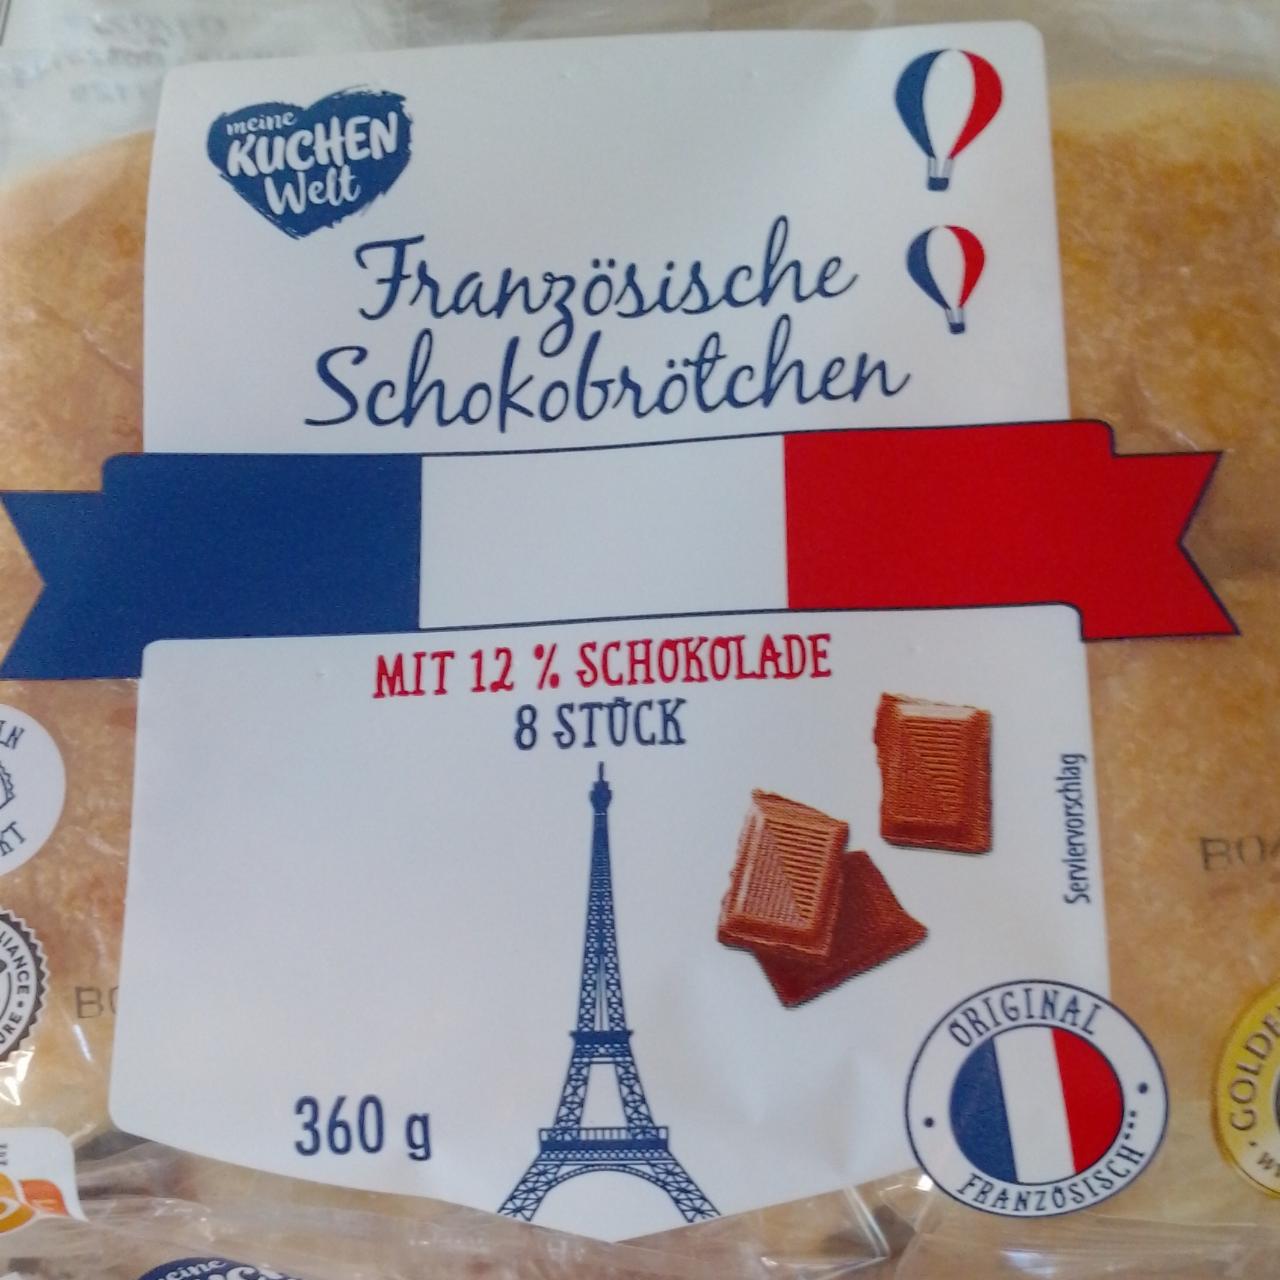 Фото - Францезские шоколадные булочки Meine kuchen welt